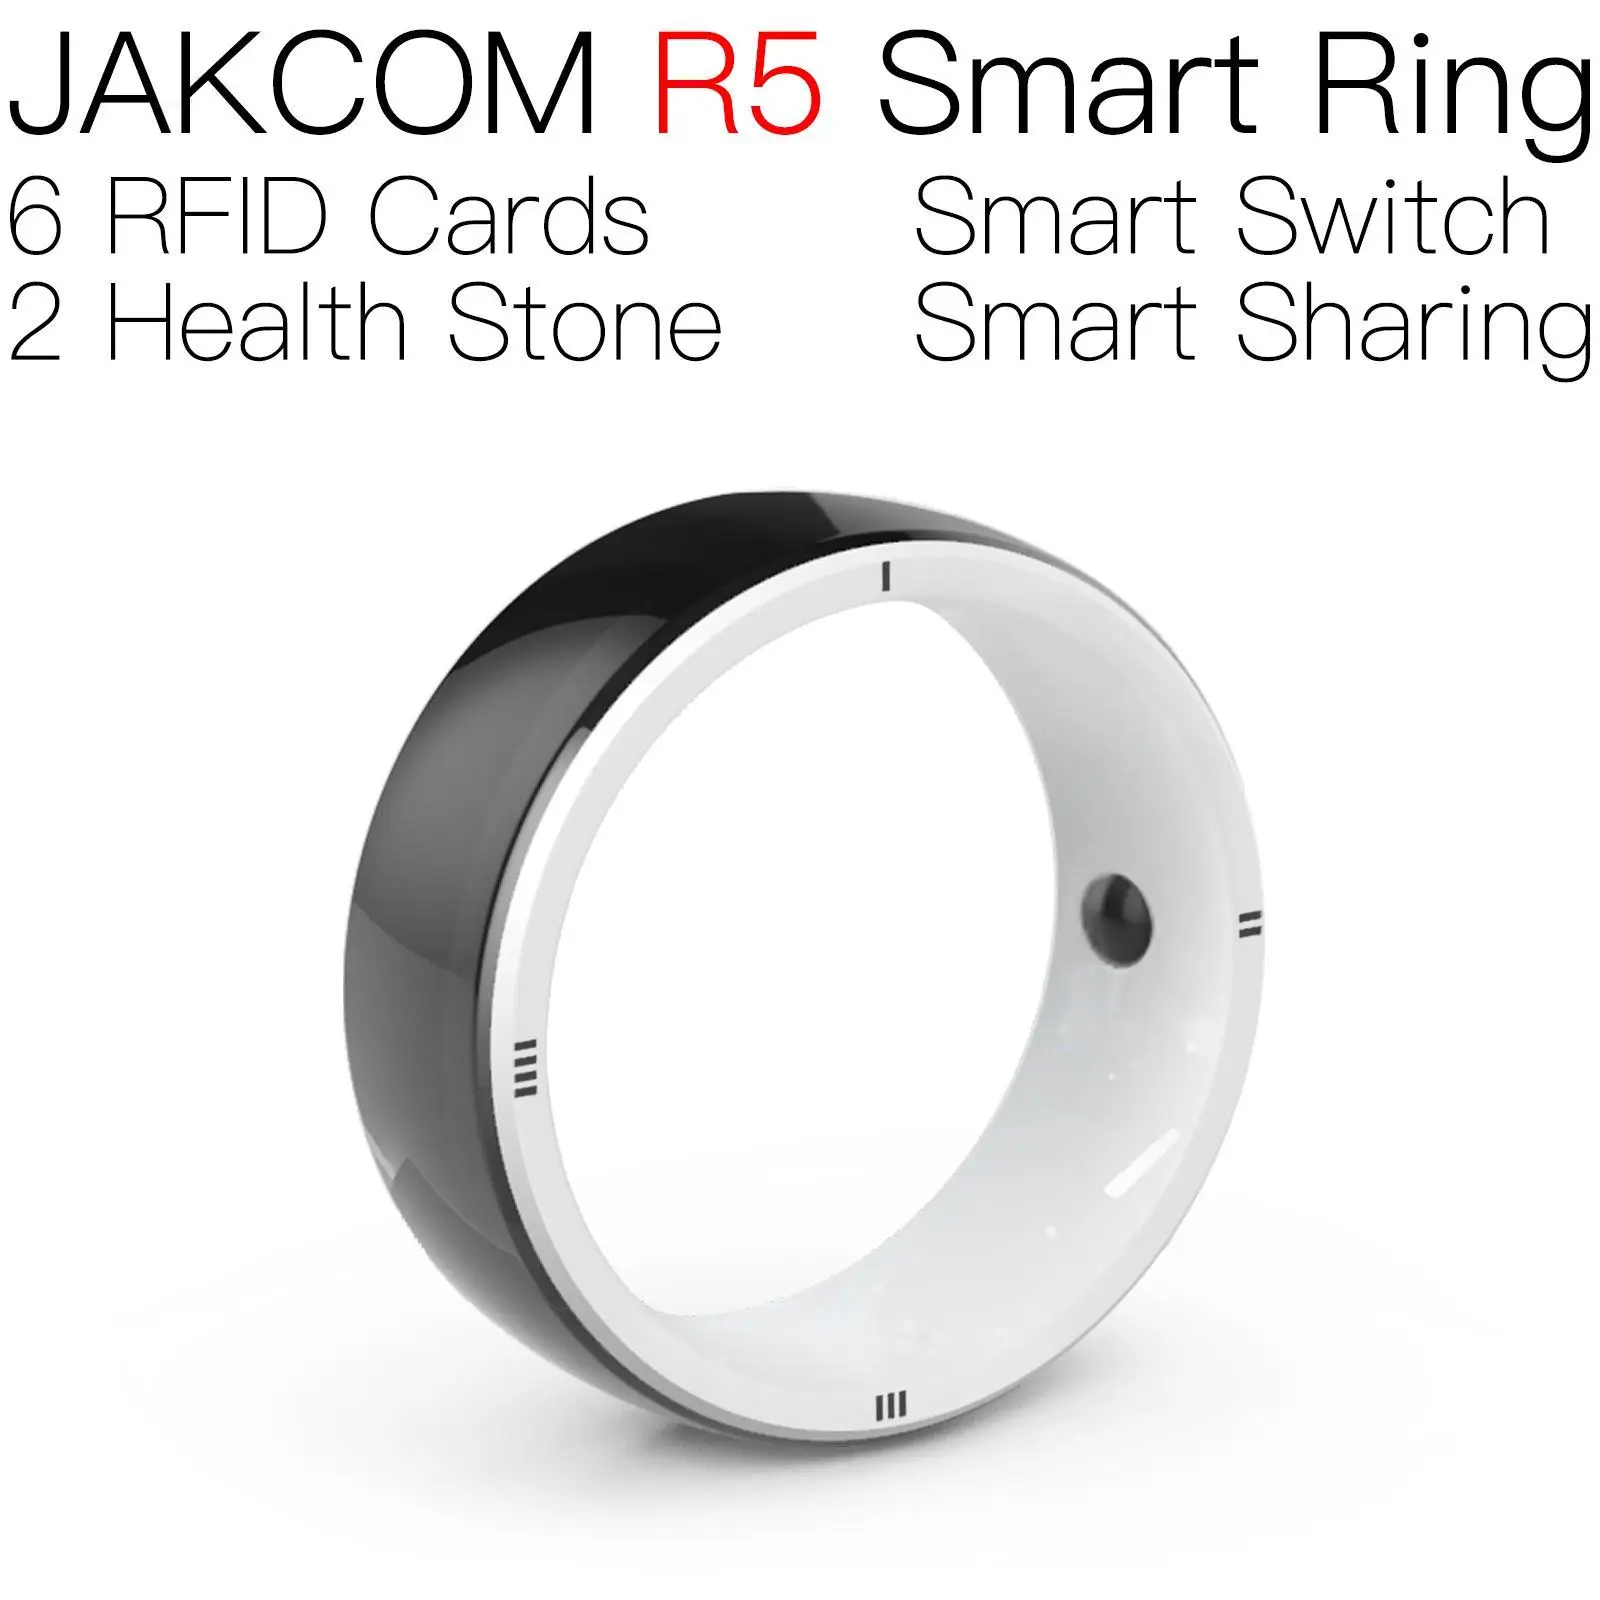 

JAKCOM R5 Smart Ring better than cow ear tag nfc name card rfid reader jutai 015 1356khz etiqueta uhf long meters pic16f88